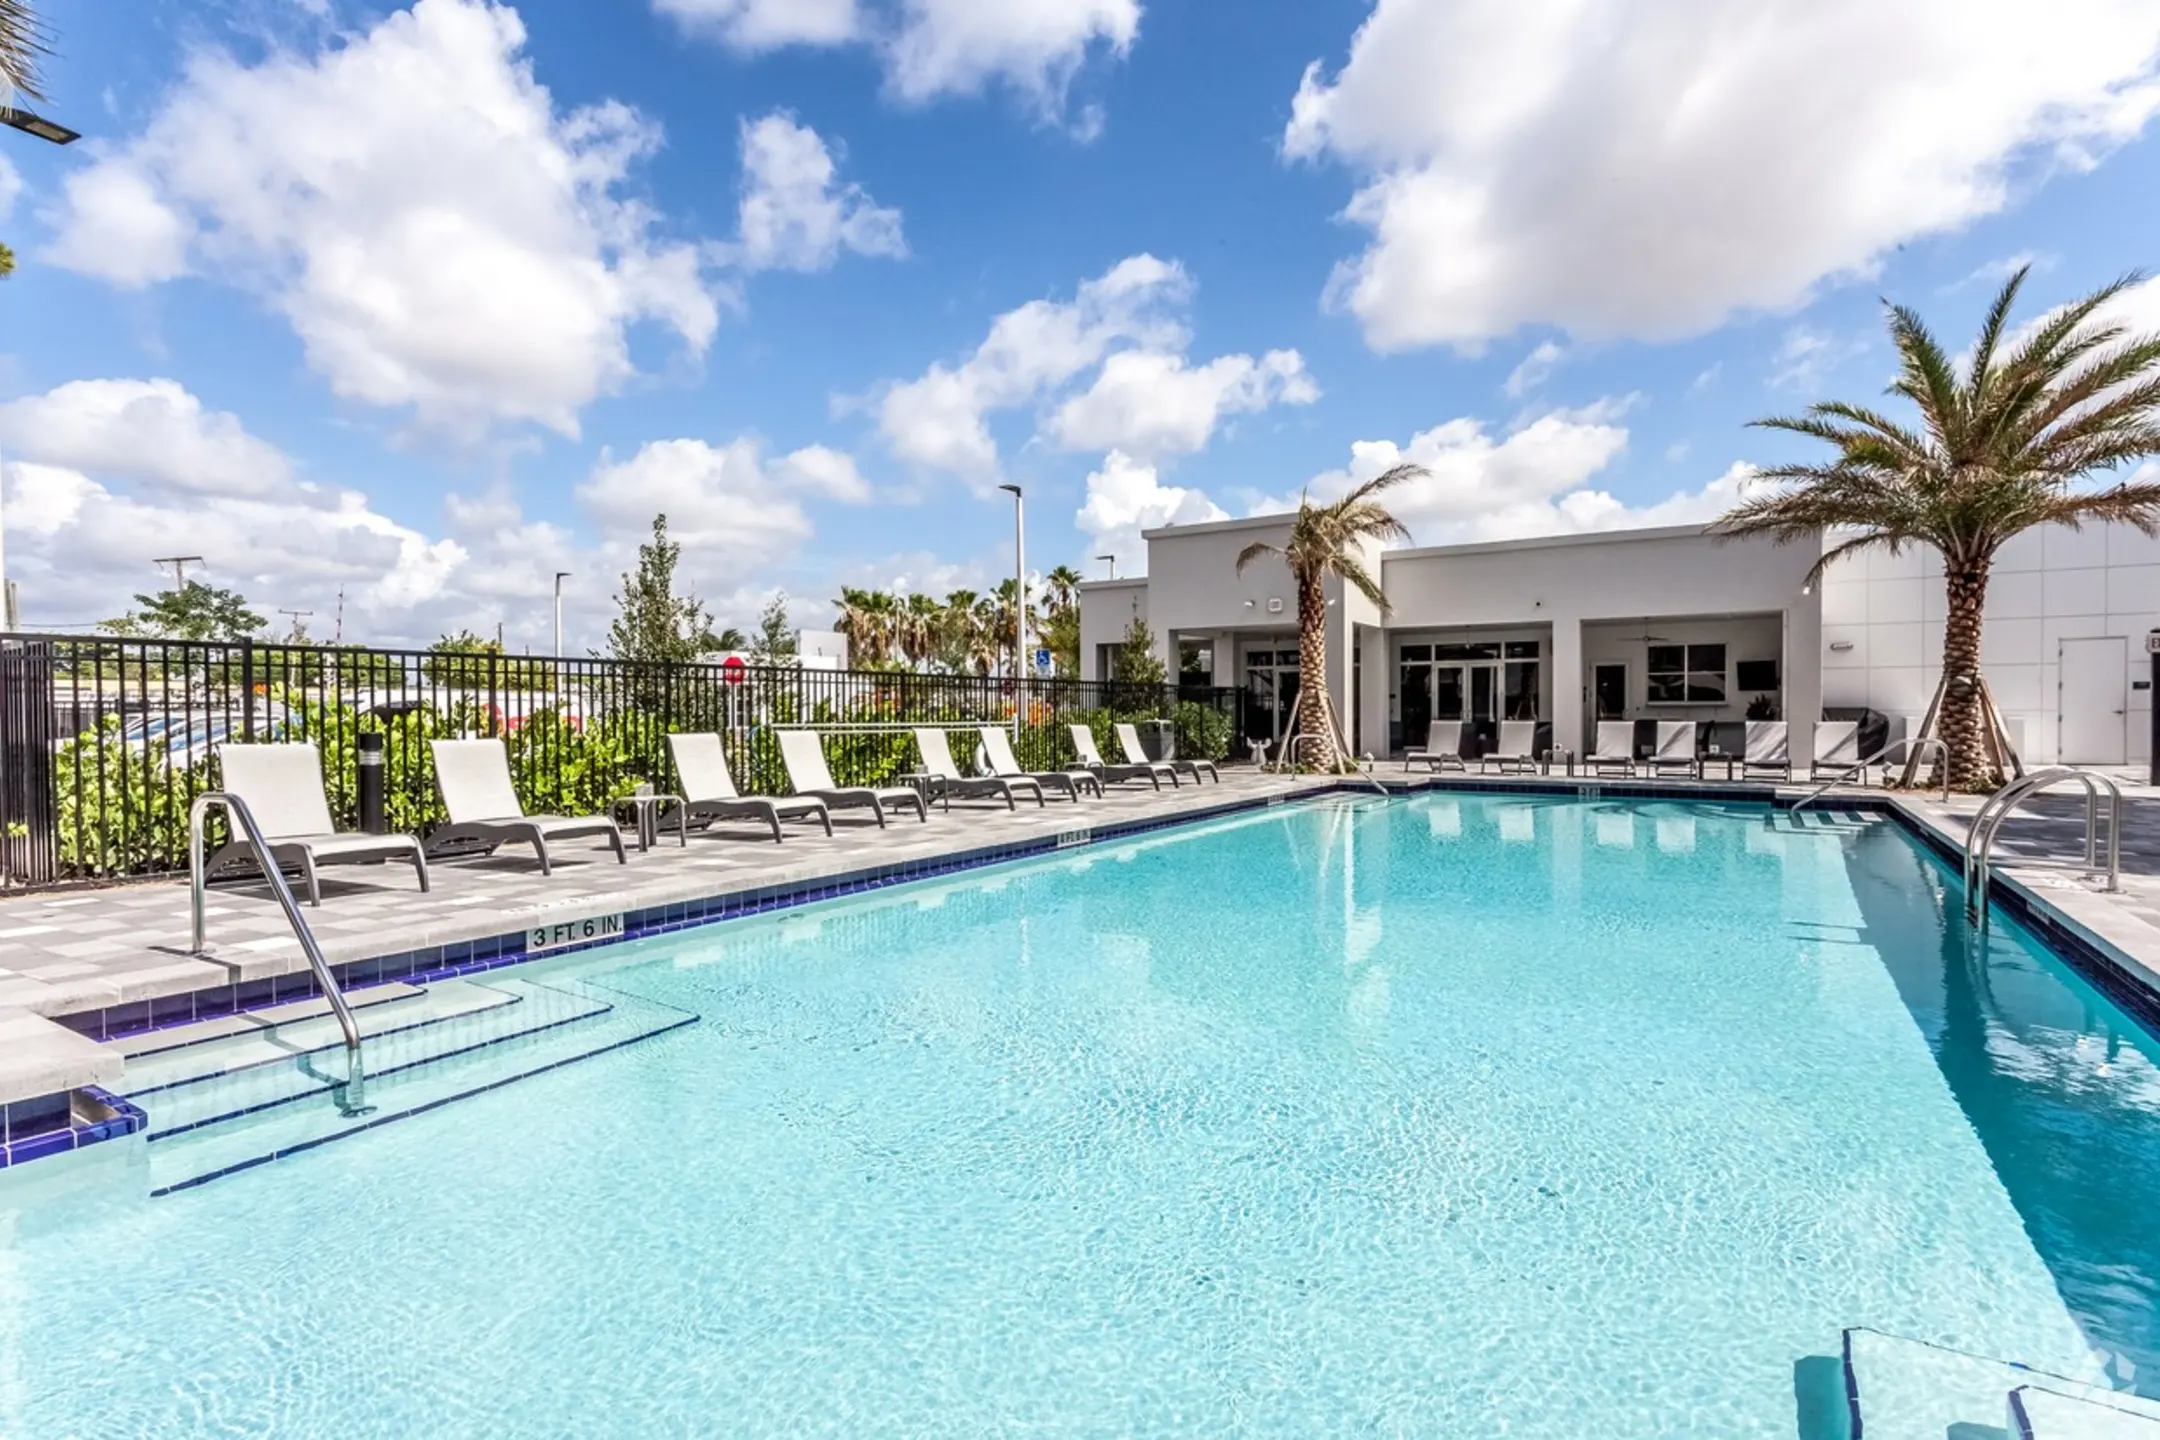 Pool - Metropolitan - Wilton Manors, FL